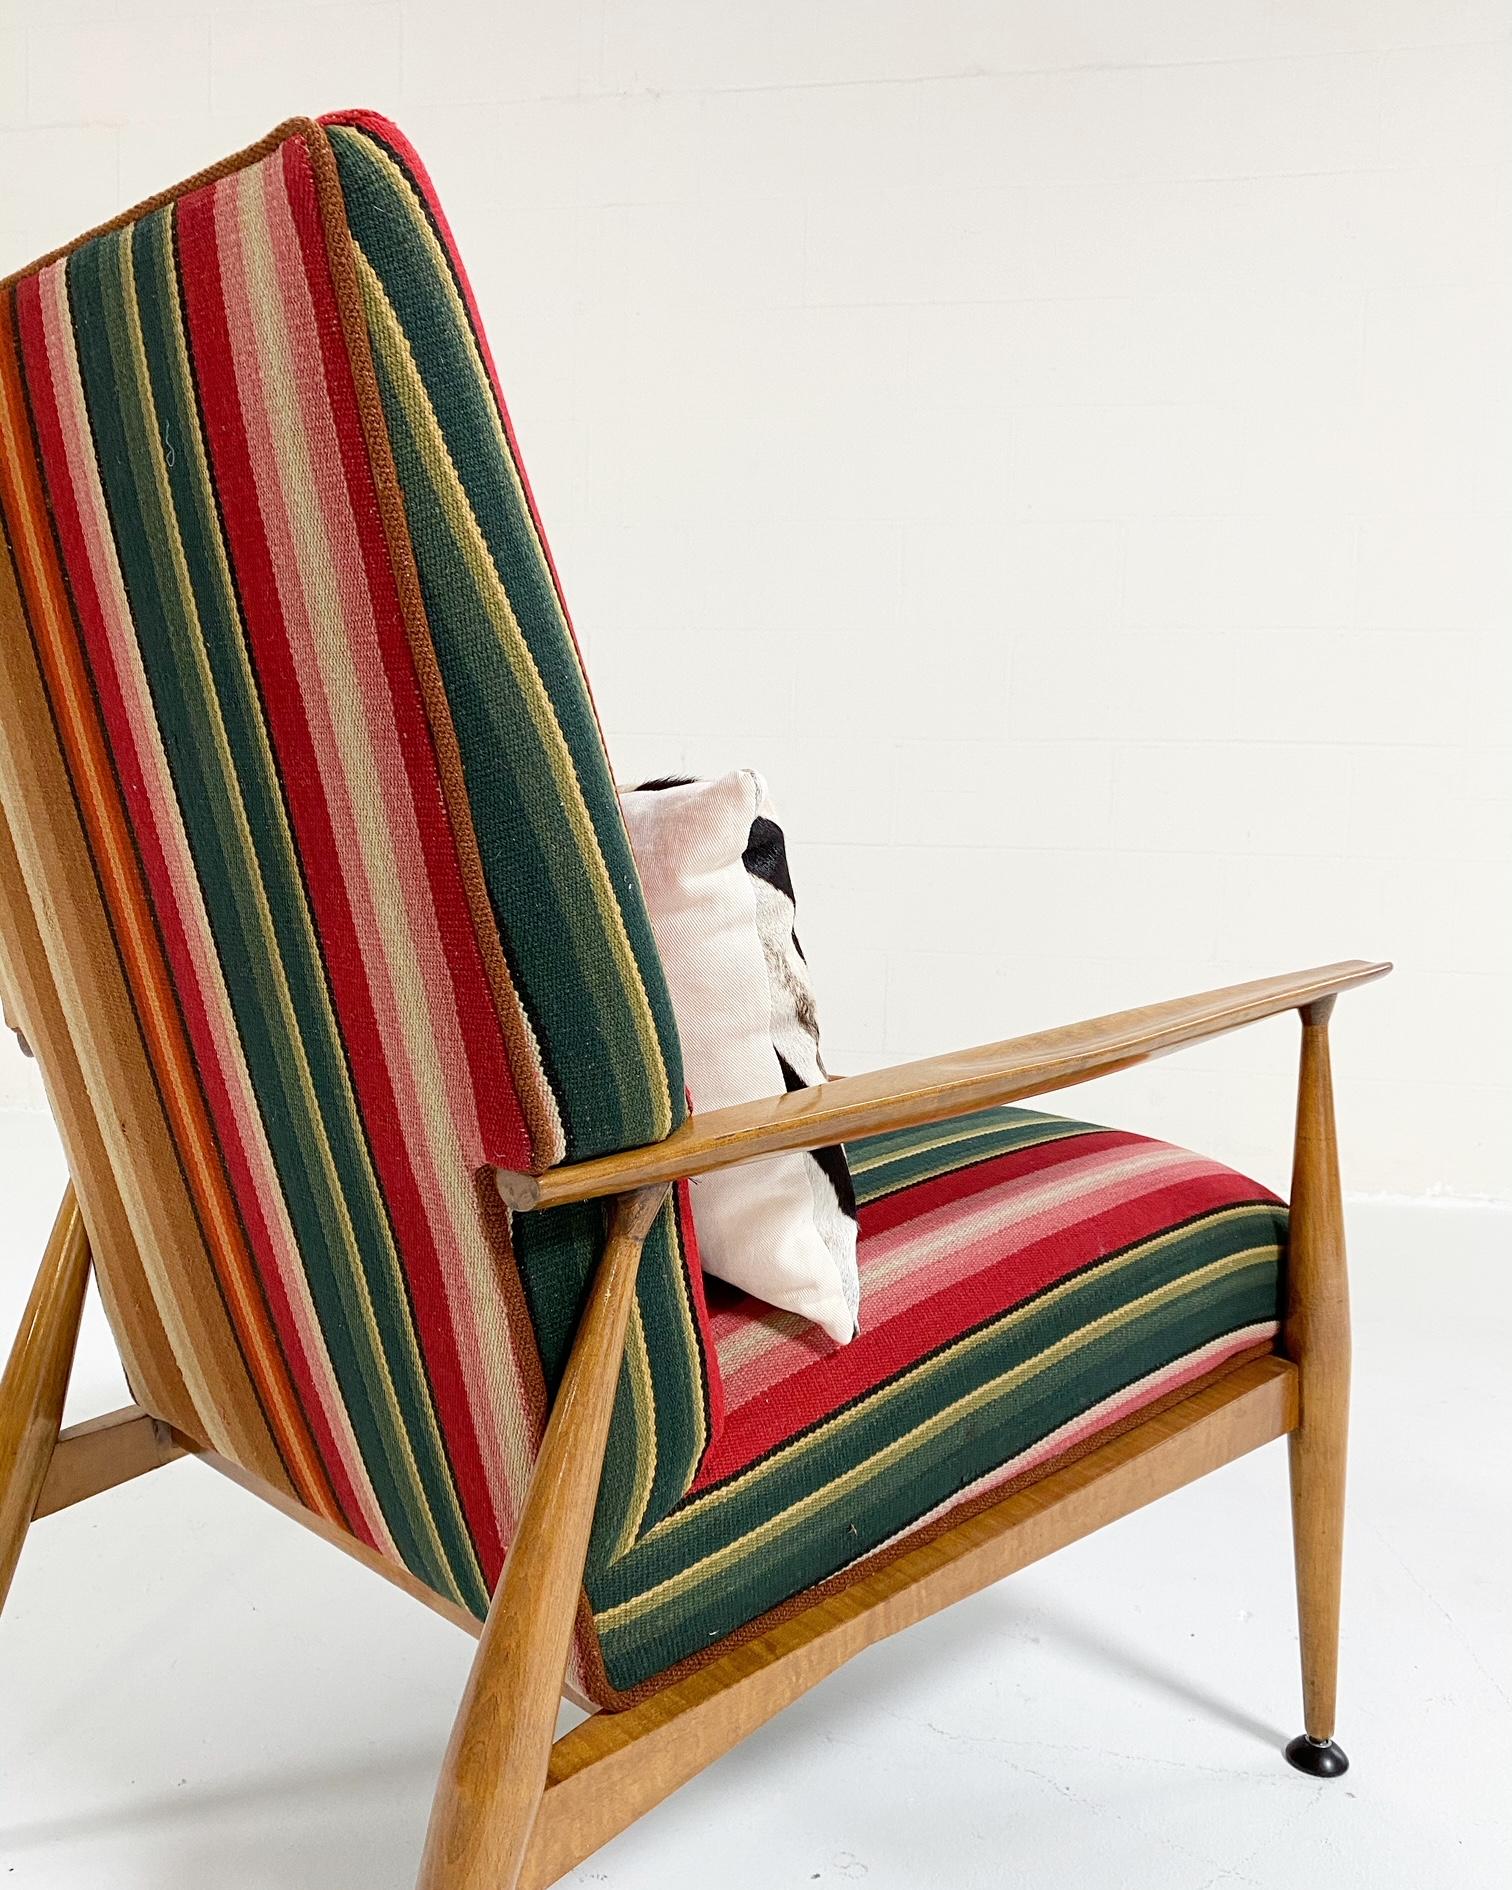 20th Century Paul McCobb Model 3041 Lounge Chair in vintage Guatemalan Fabric